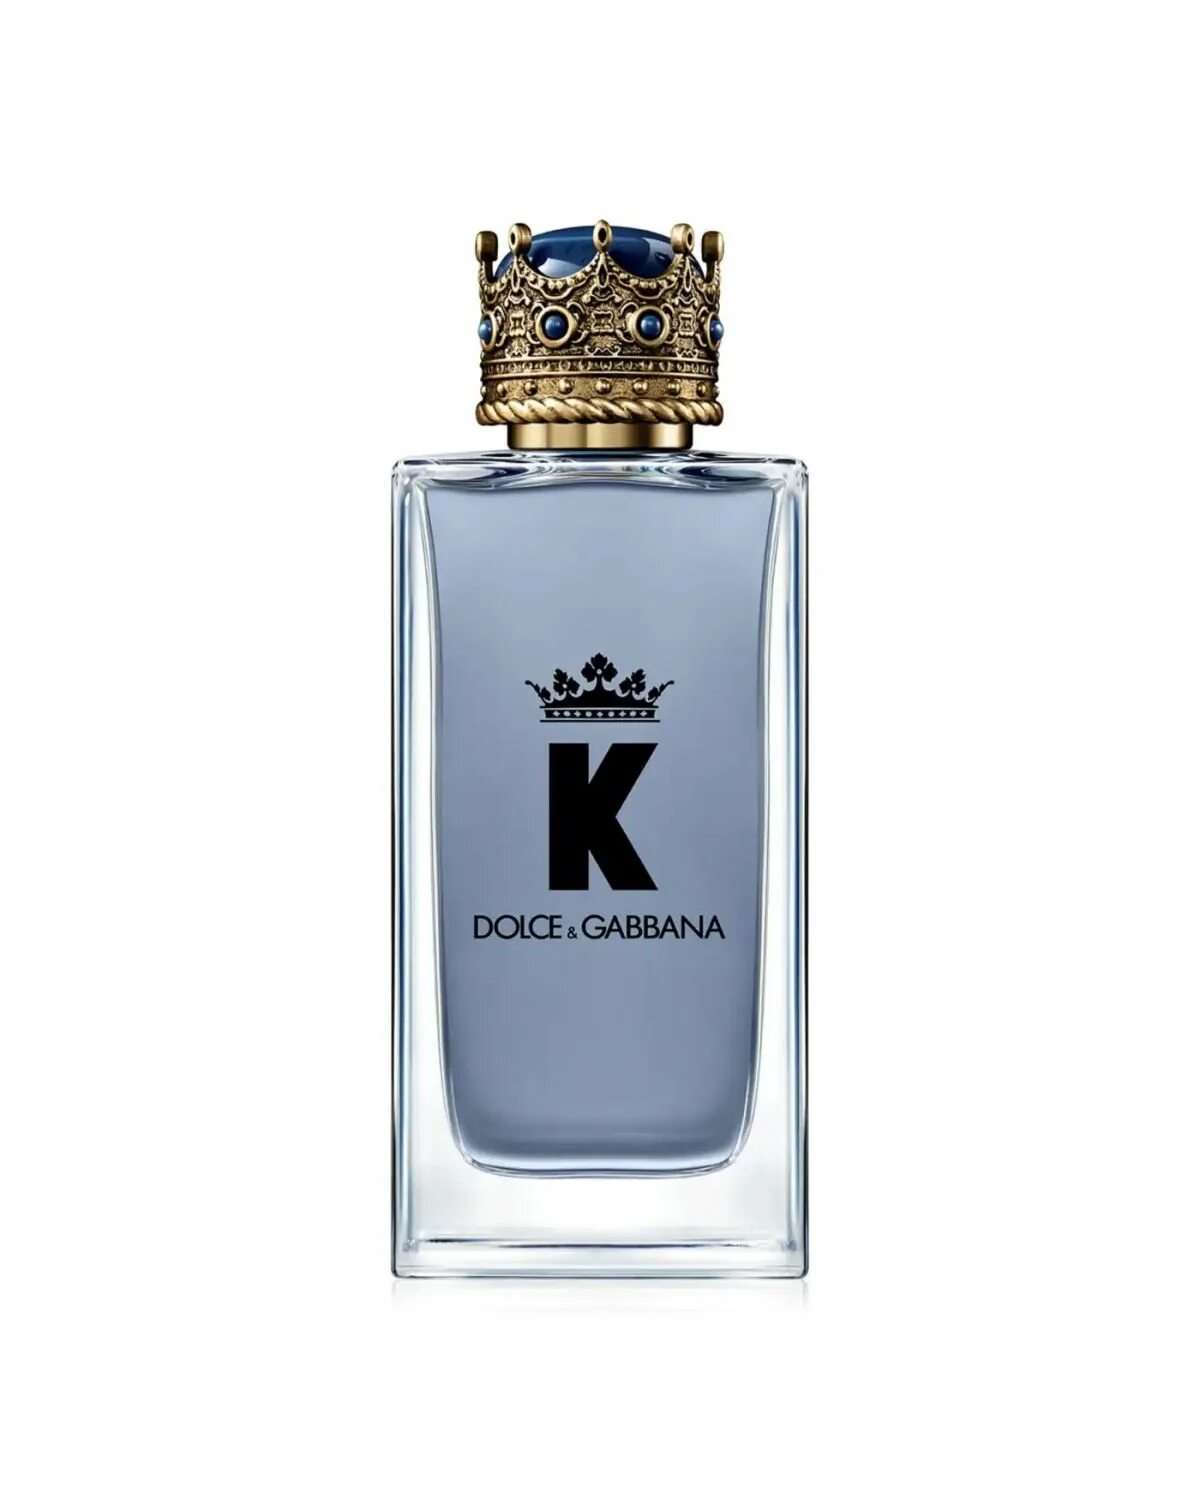 •Dolce&Gabbana k EDT 100ml. Dolce and Gabbana King 50 ml. Dolce&Gabbana k (m) 100ml EDT. Dolce Gabbana King 100ml. Парфюм дольче габбана корона